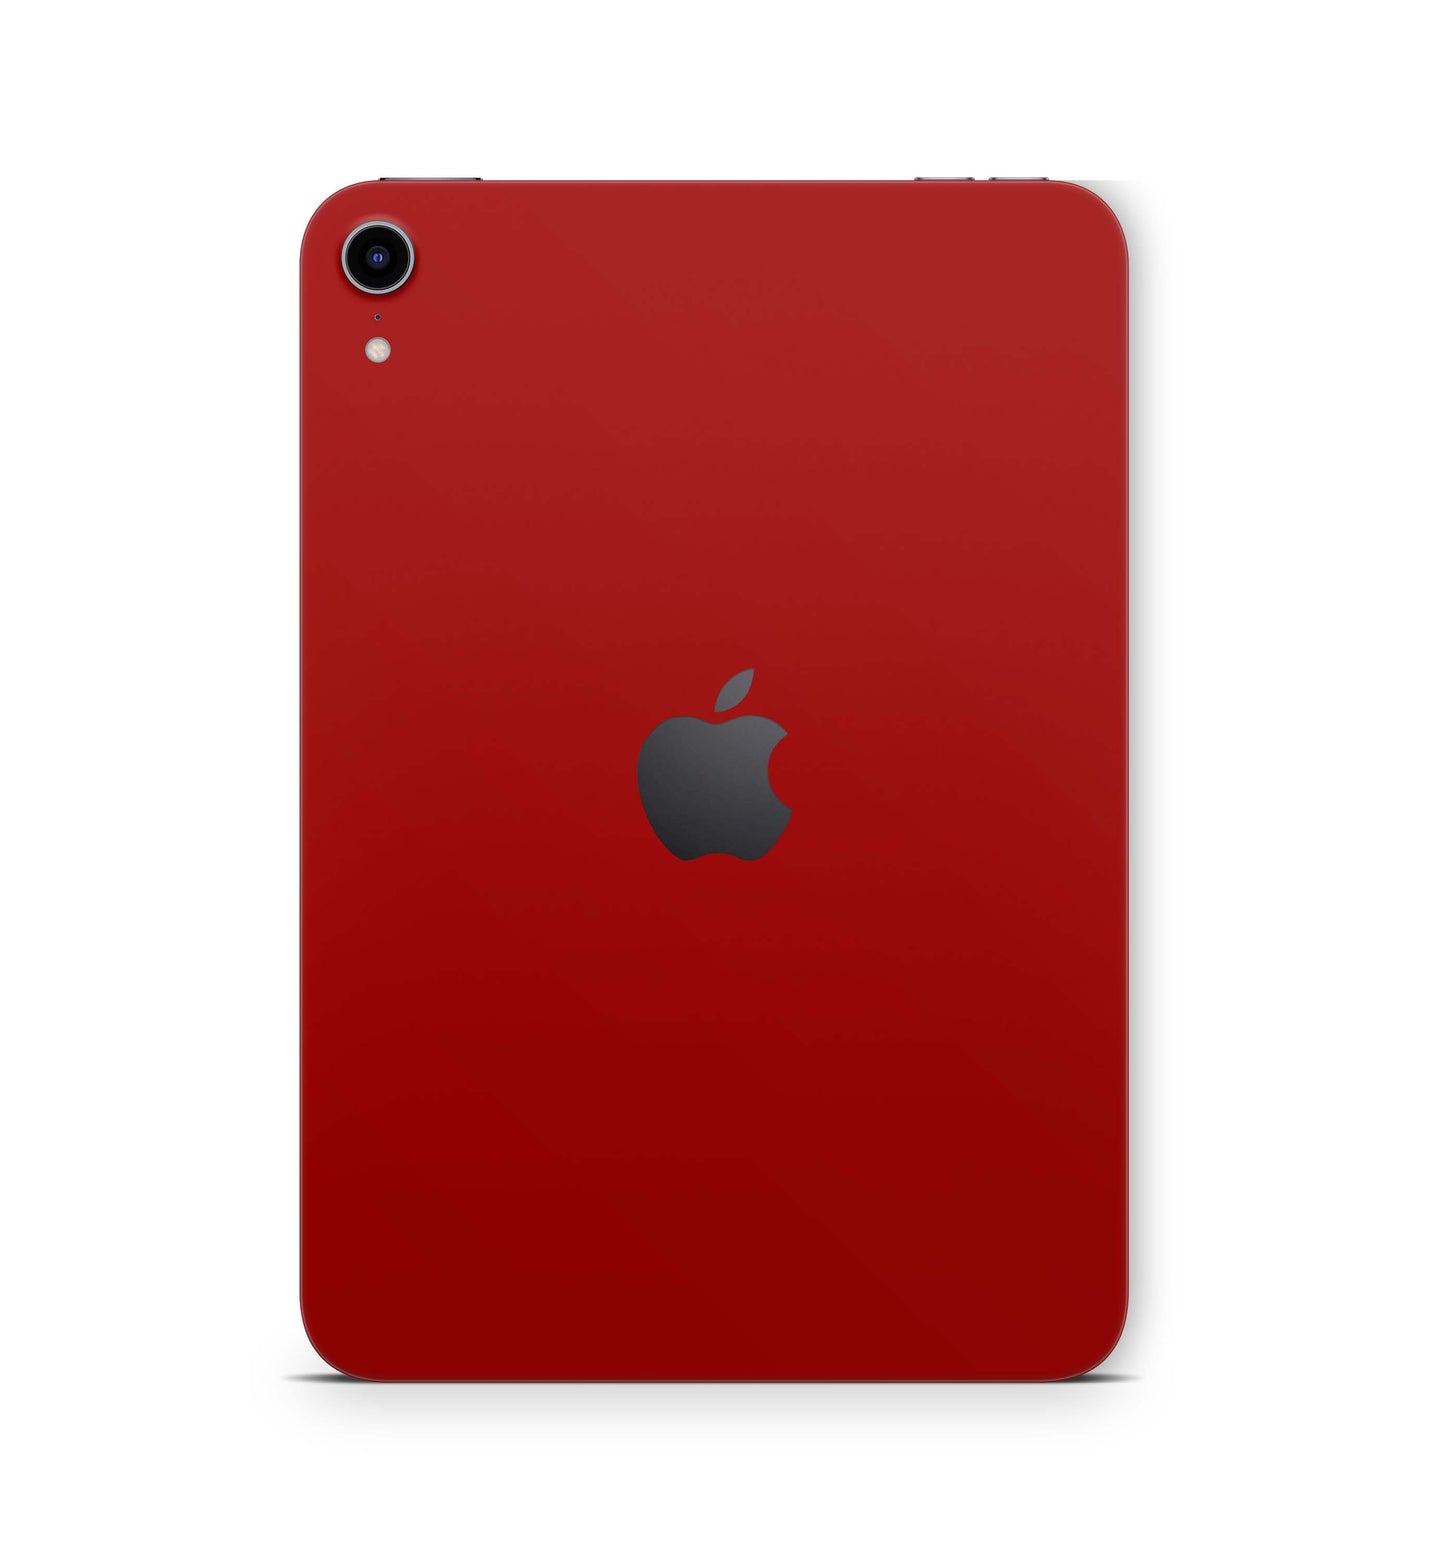 iPad Mini Skin Design Cover Folie Vinyl Skins & Wraps für alle iPad Mini Modelle Aufkleber Skins4u Solid-state-rot  